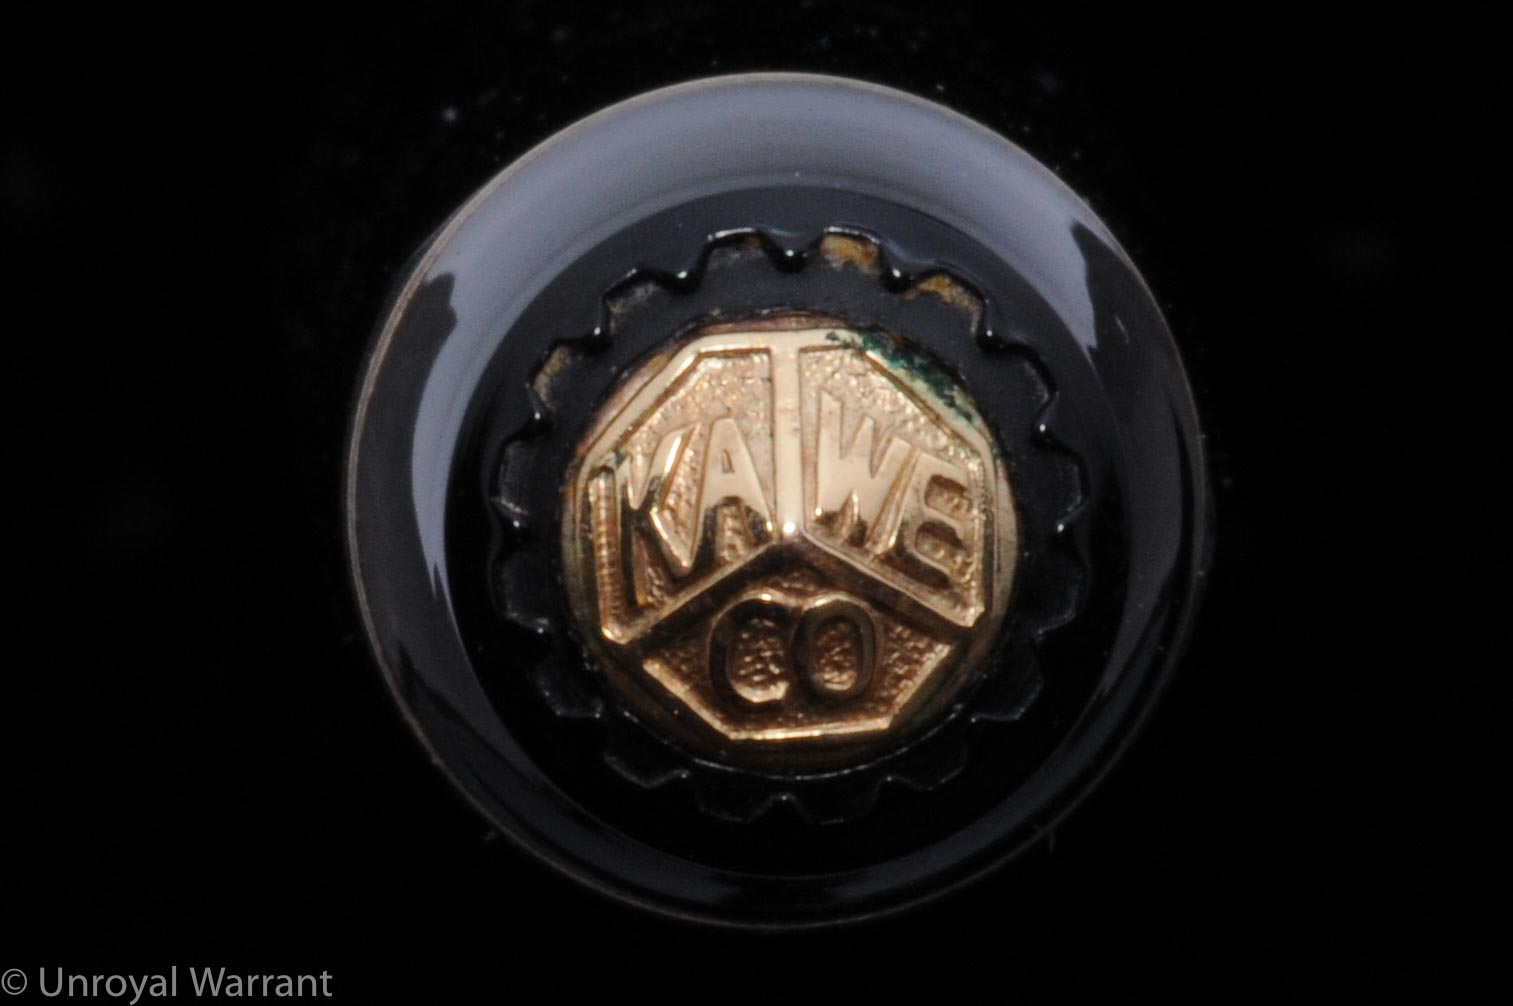 Kaweco "jewel" on a vintage Sport